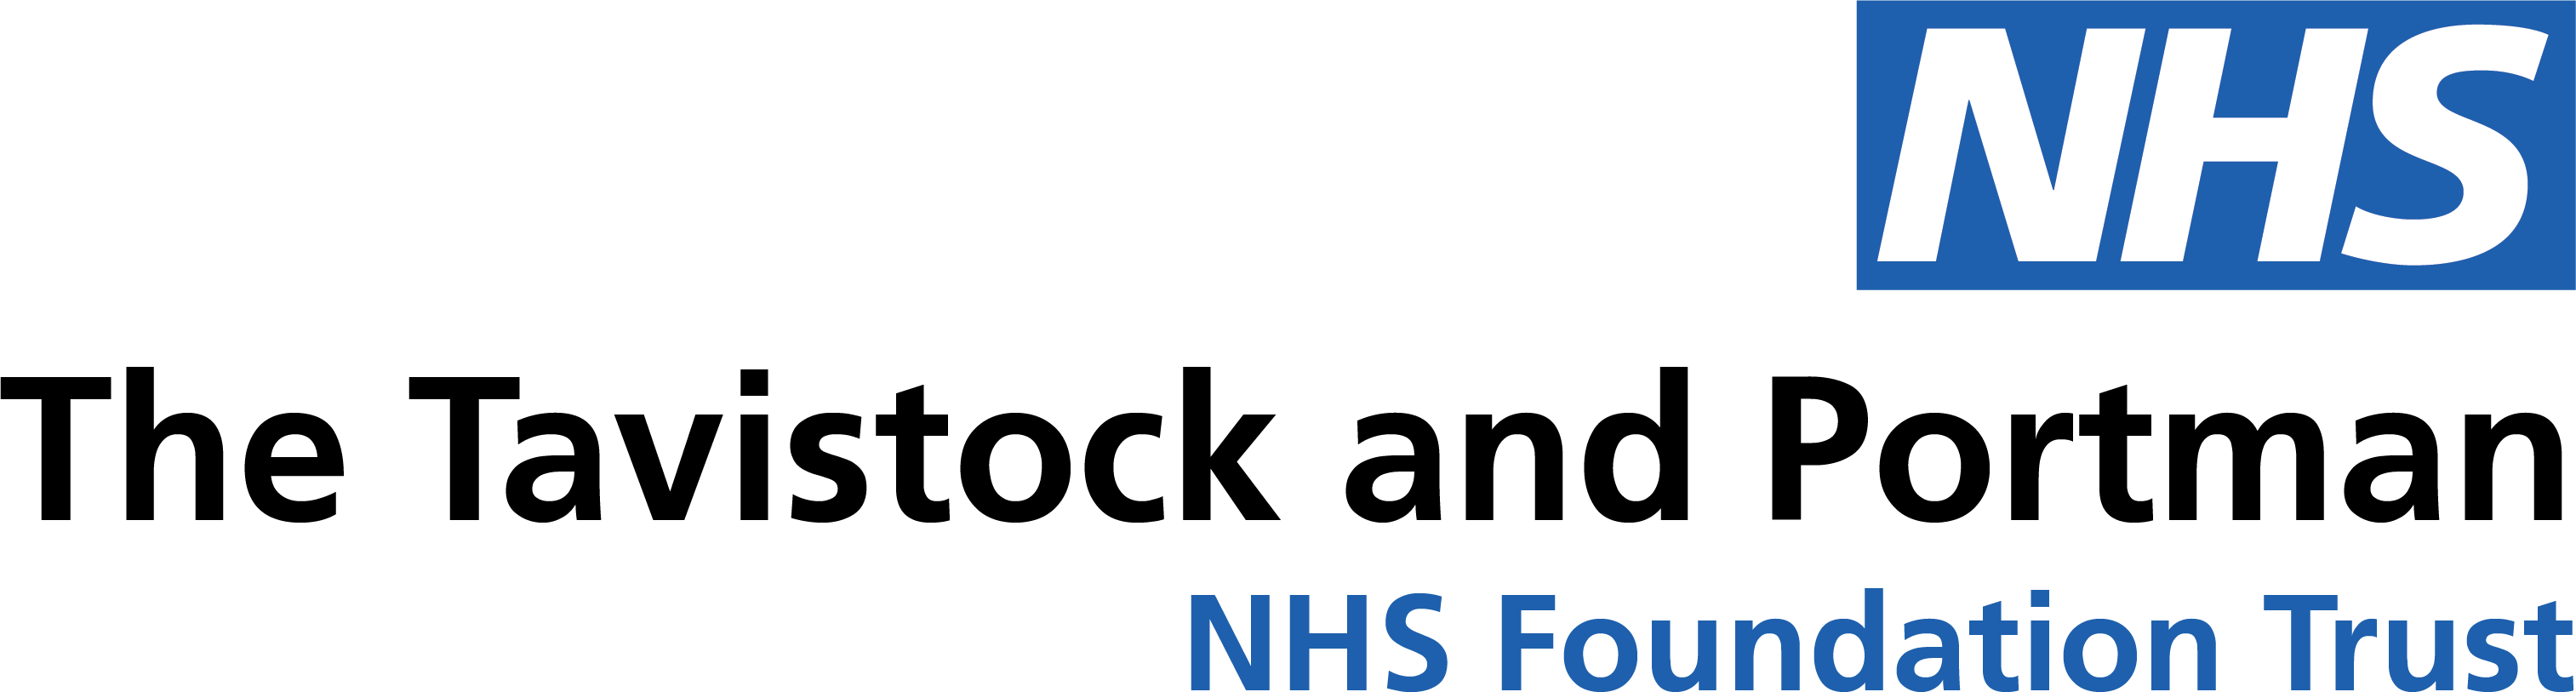 Tavistock and Portman NHS logo